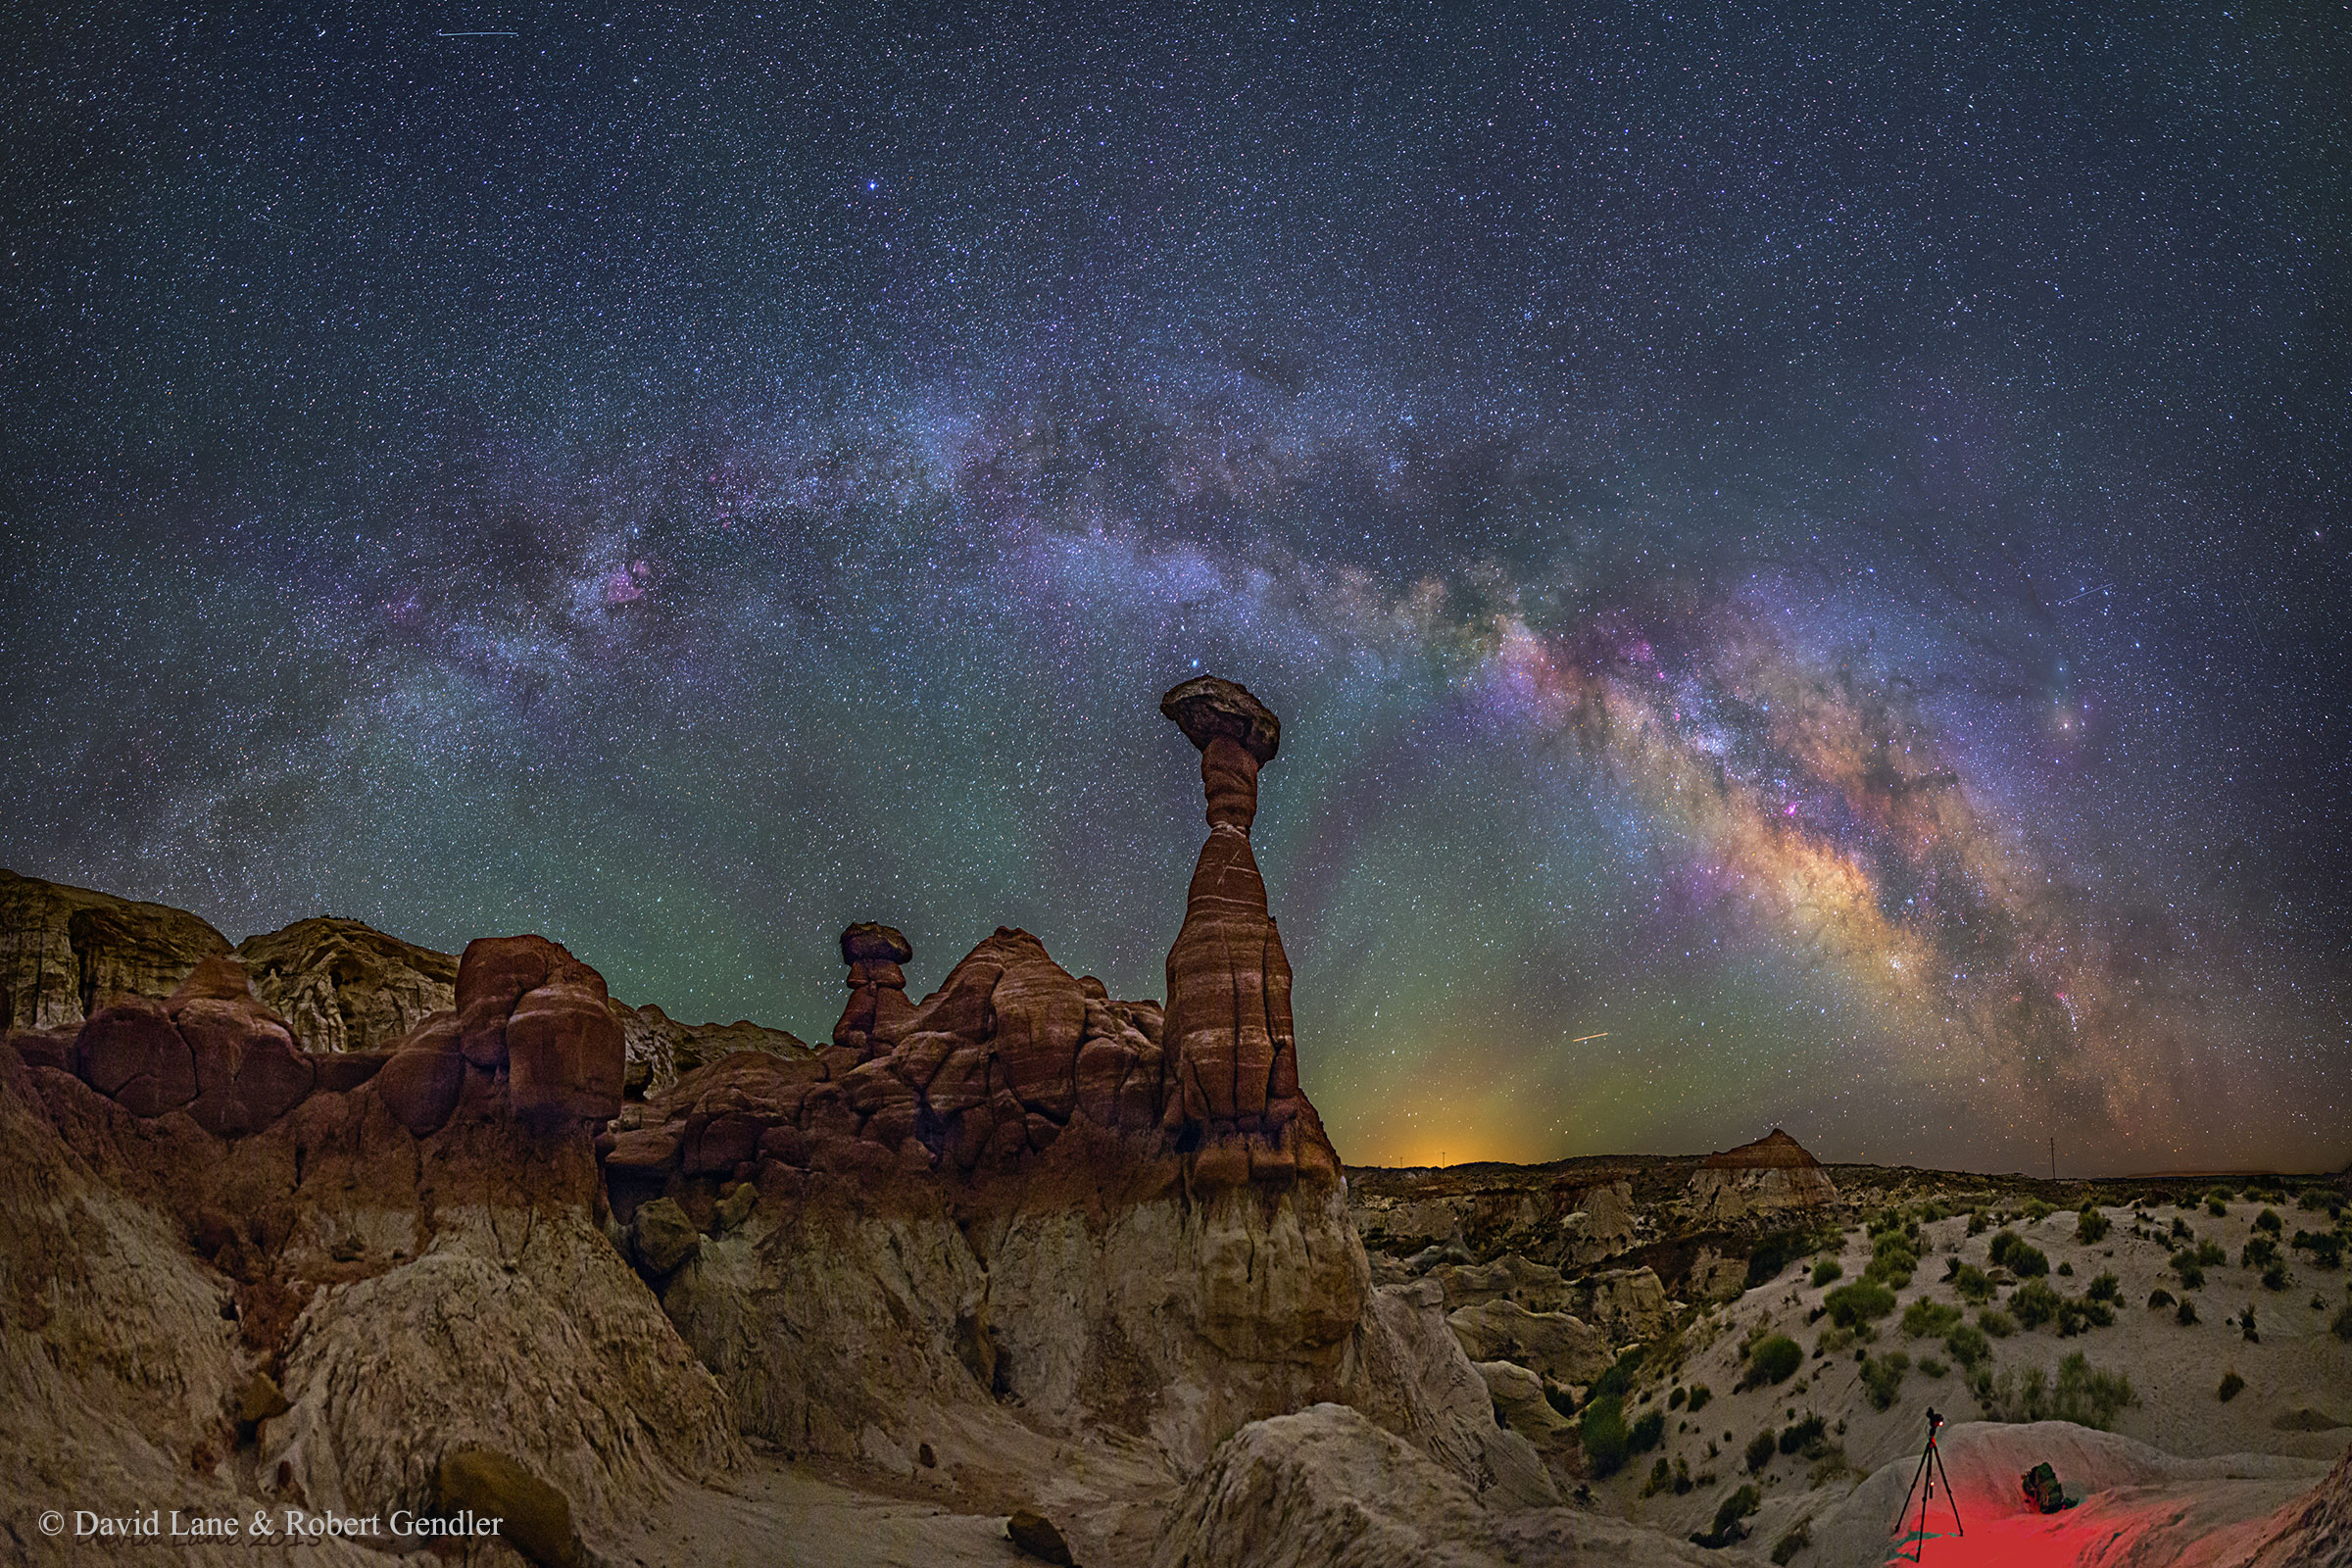 The Milky Way Over the Arizona Toadstools